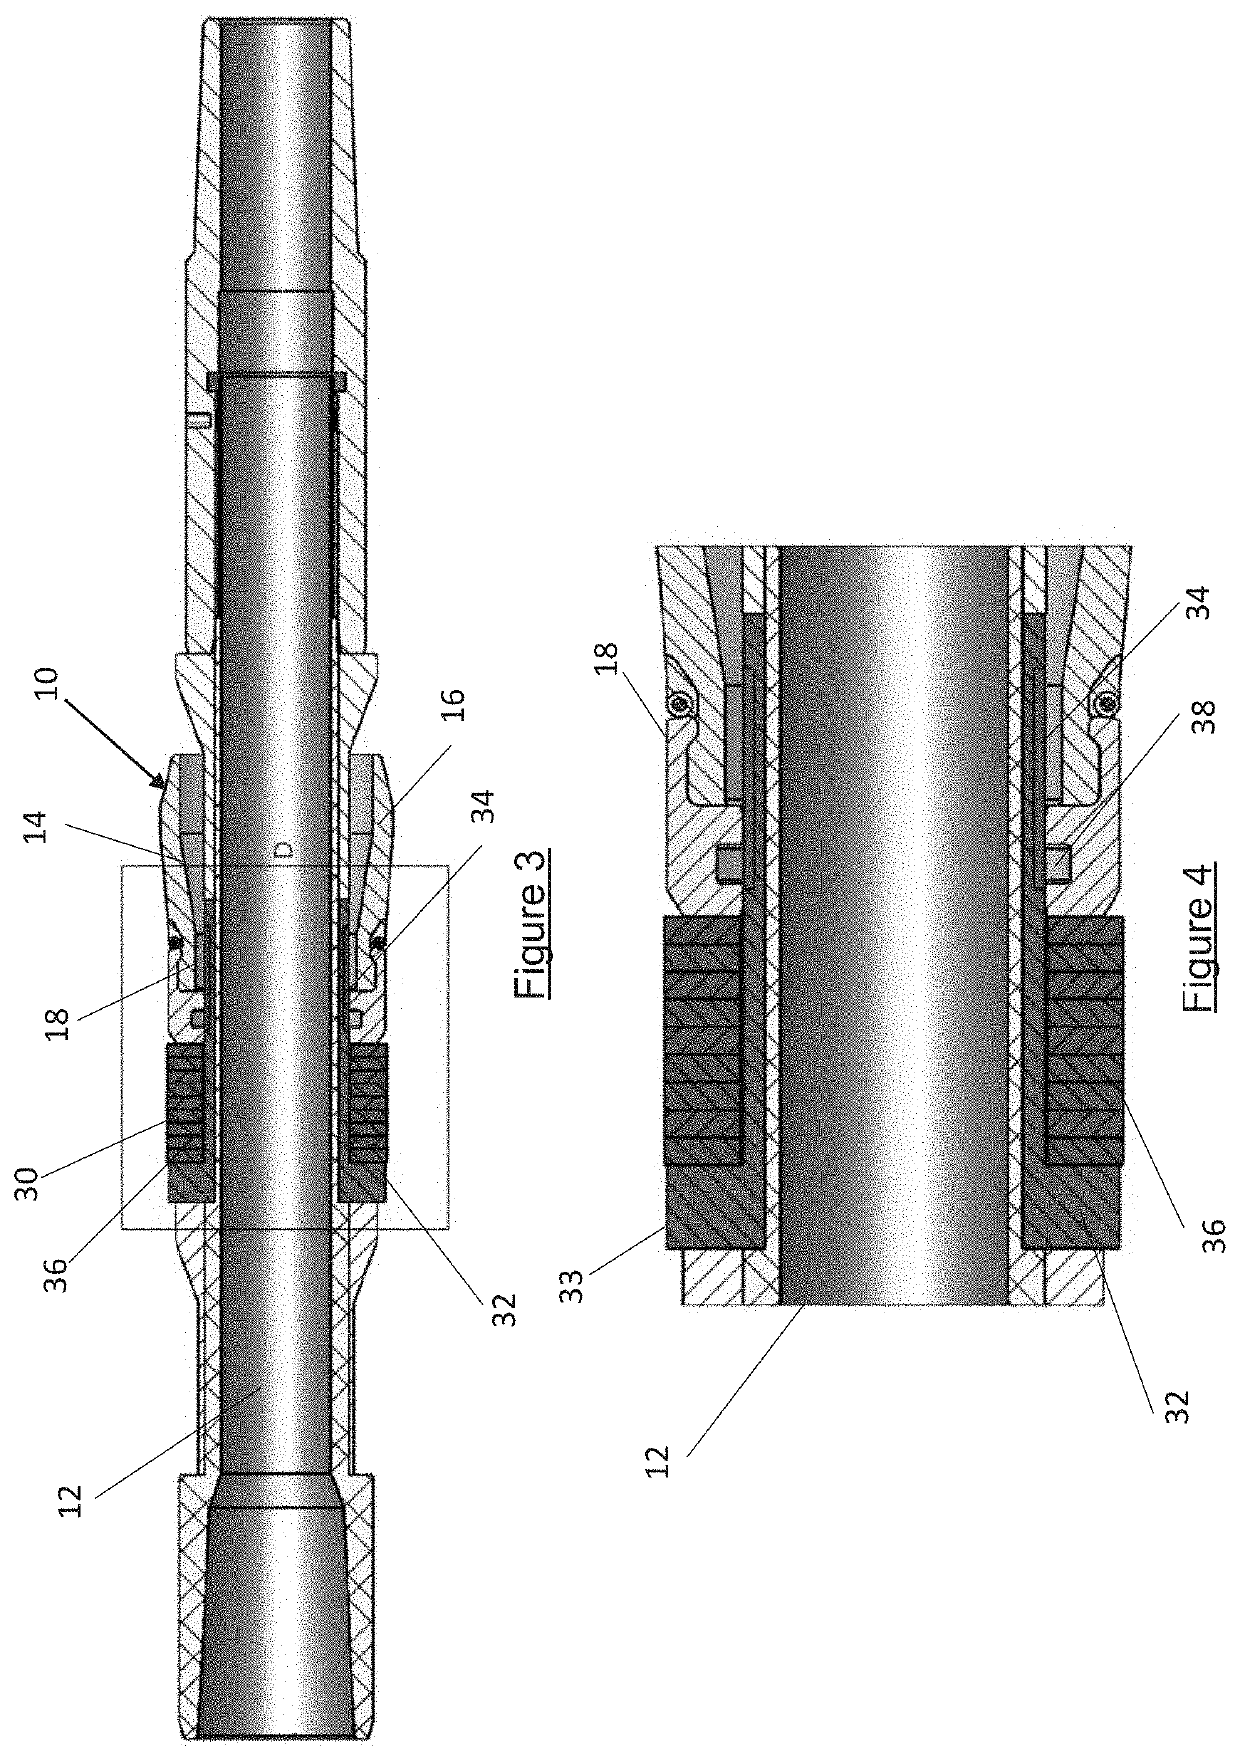 Downhole sealing apparatus and method